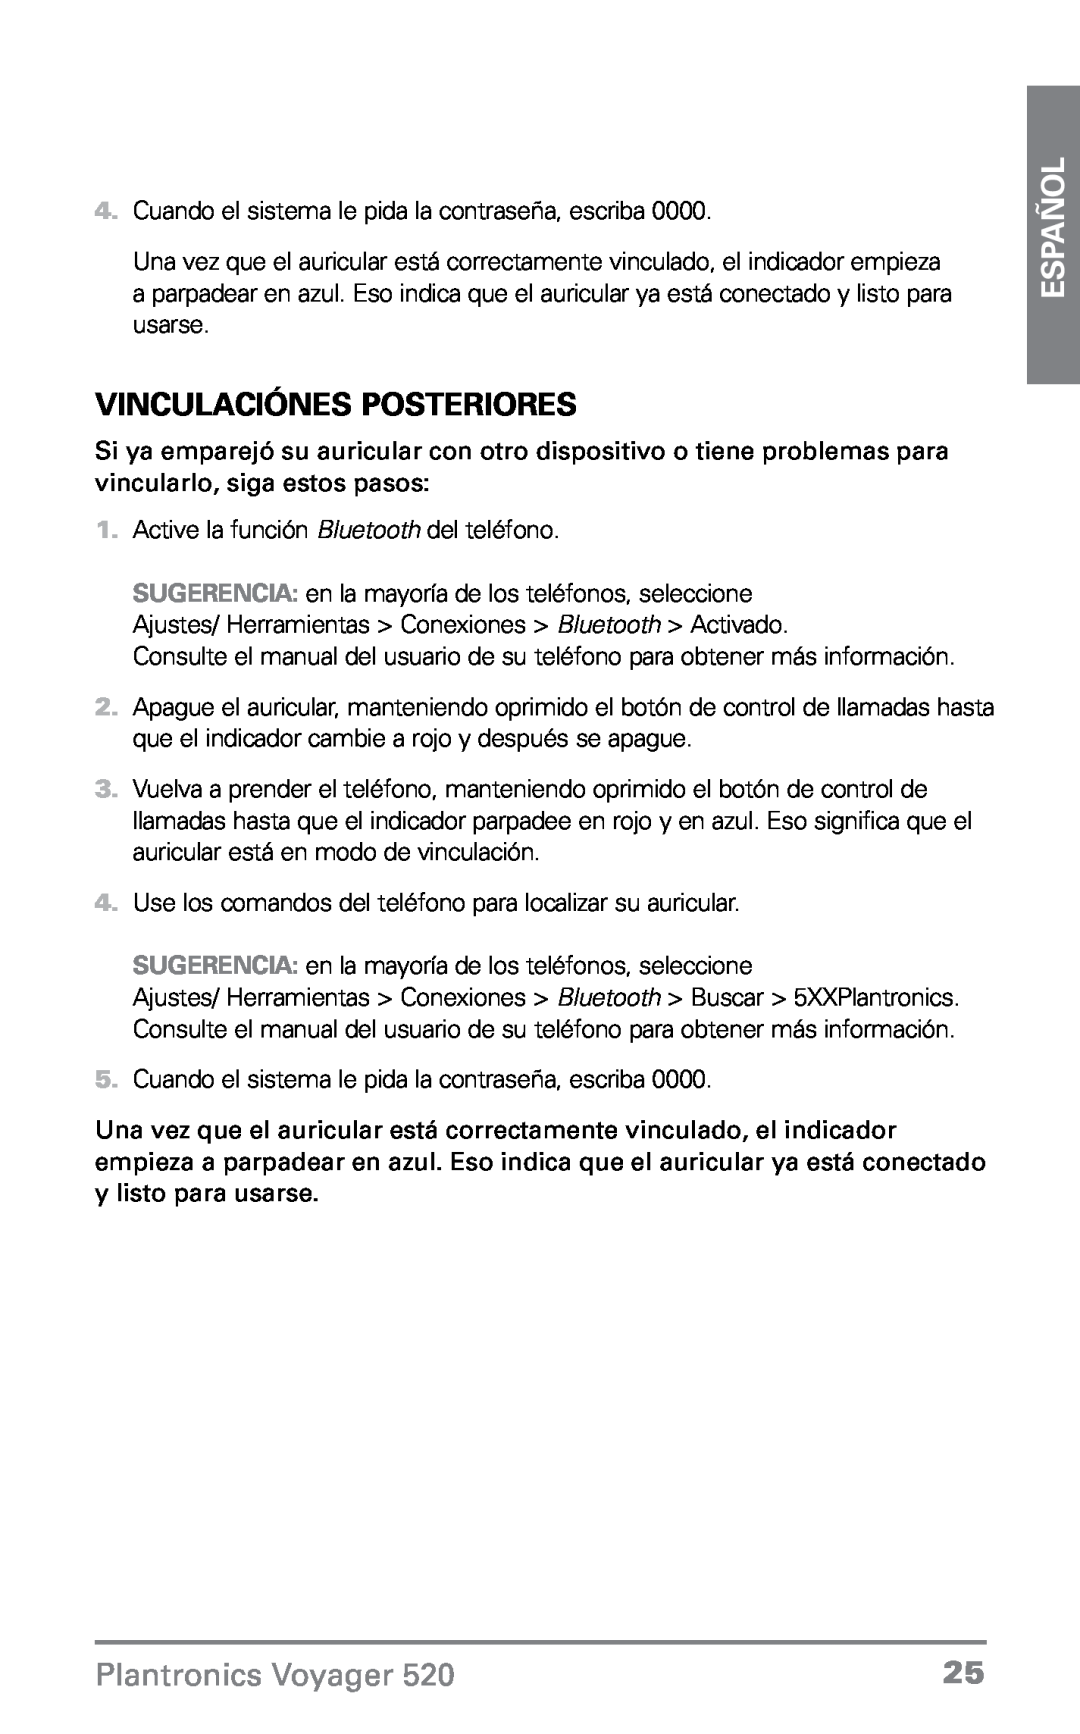 Plantronics 520 manual Vinculaciónes posteriores, Español, Plantronics Voyager 